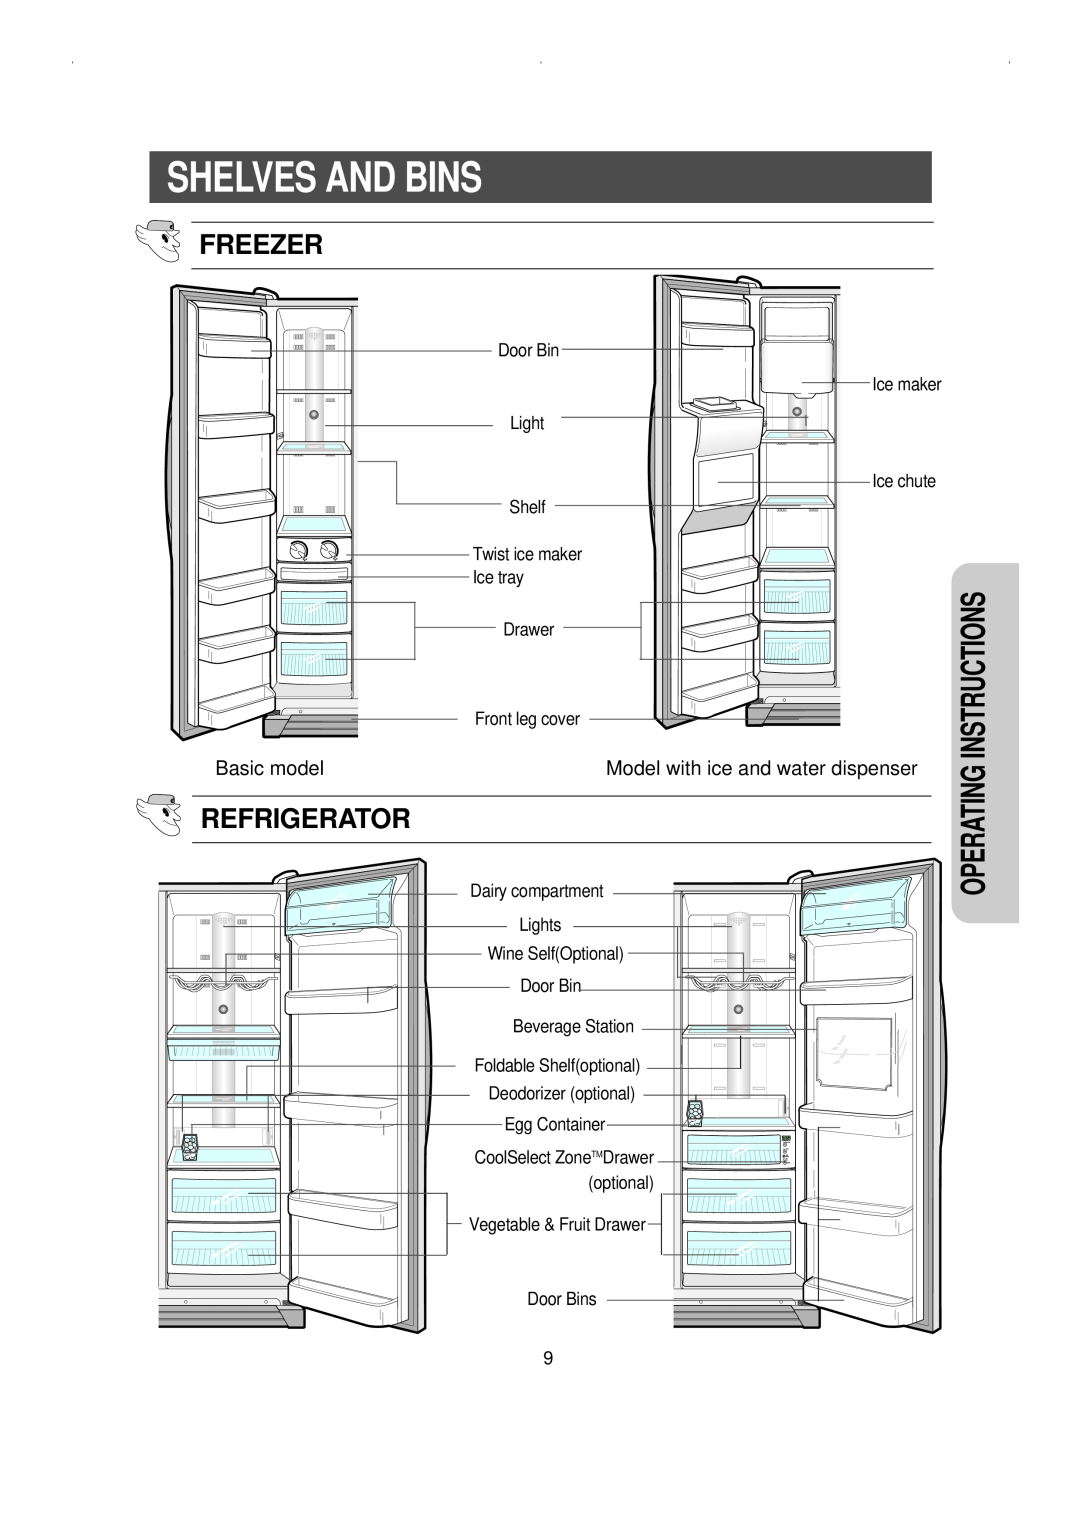 Samsung RS23KCSW owner manual Shelves And Bins, Freezer, Refrigerator, Operating Instructions, Basic model 